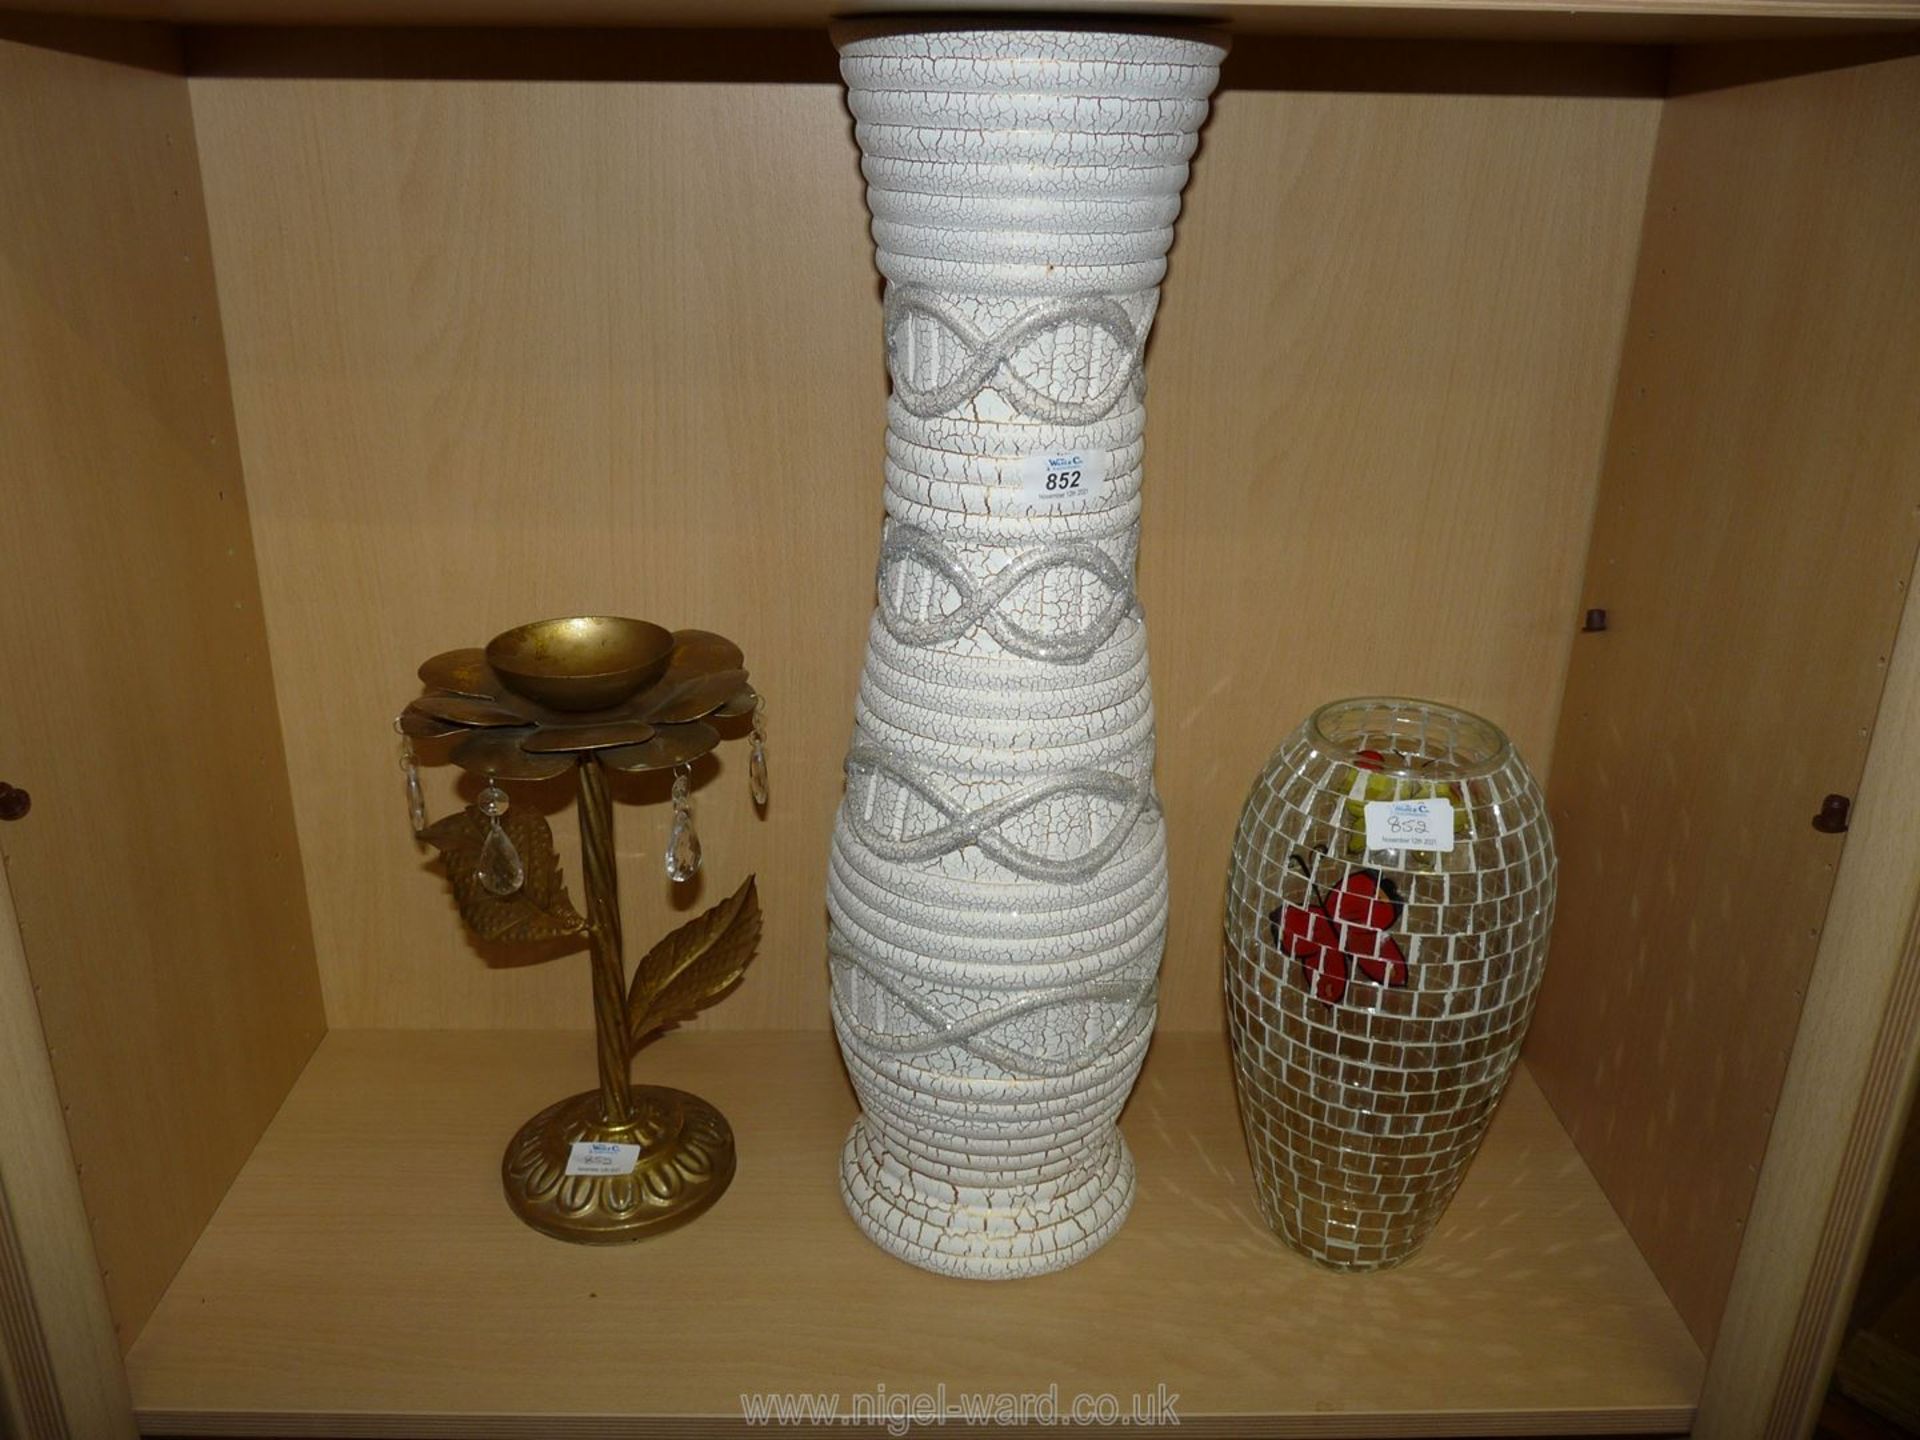 A large modern ceramic floor vase, glass vase and metal night light stand.